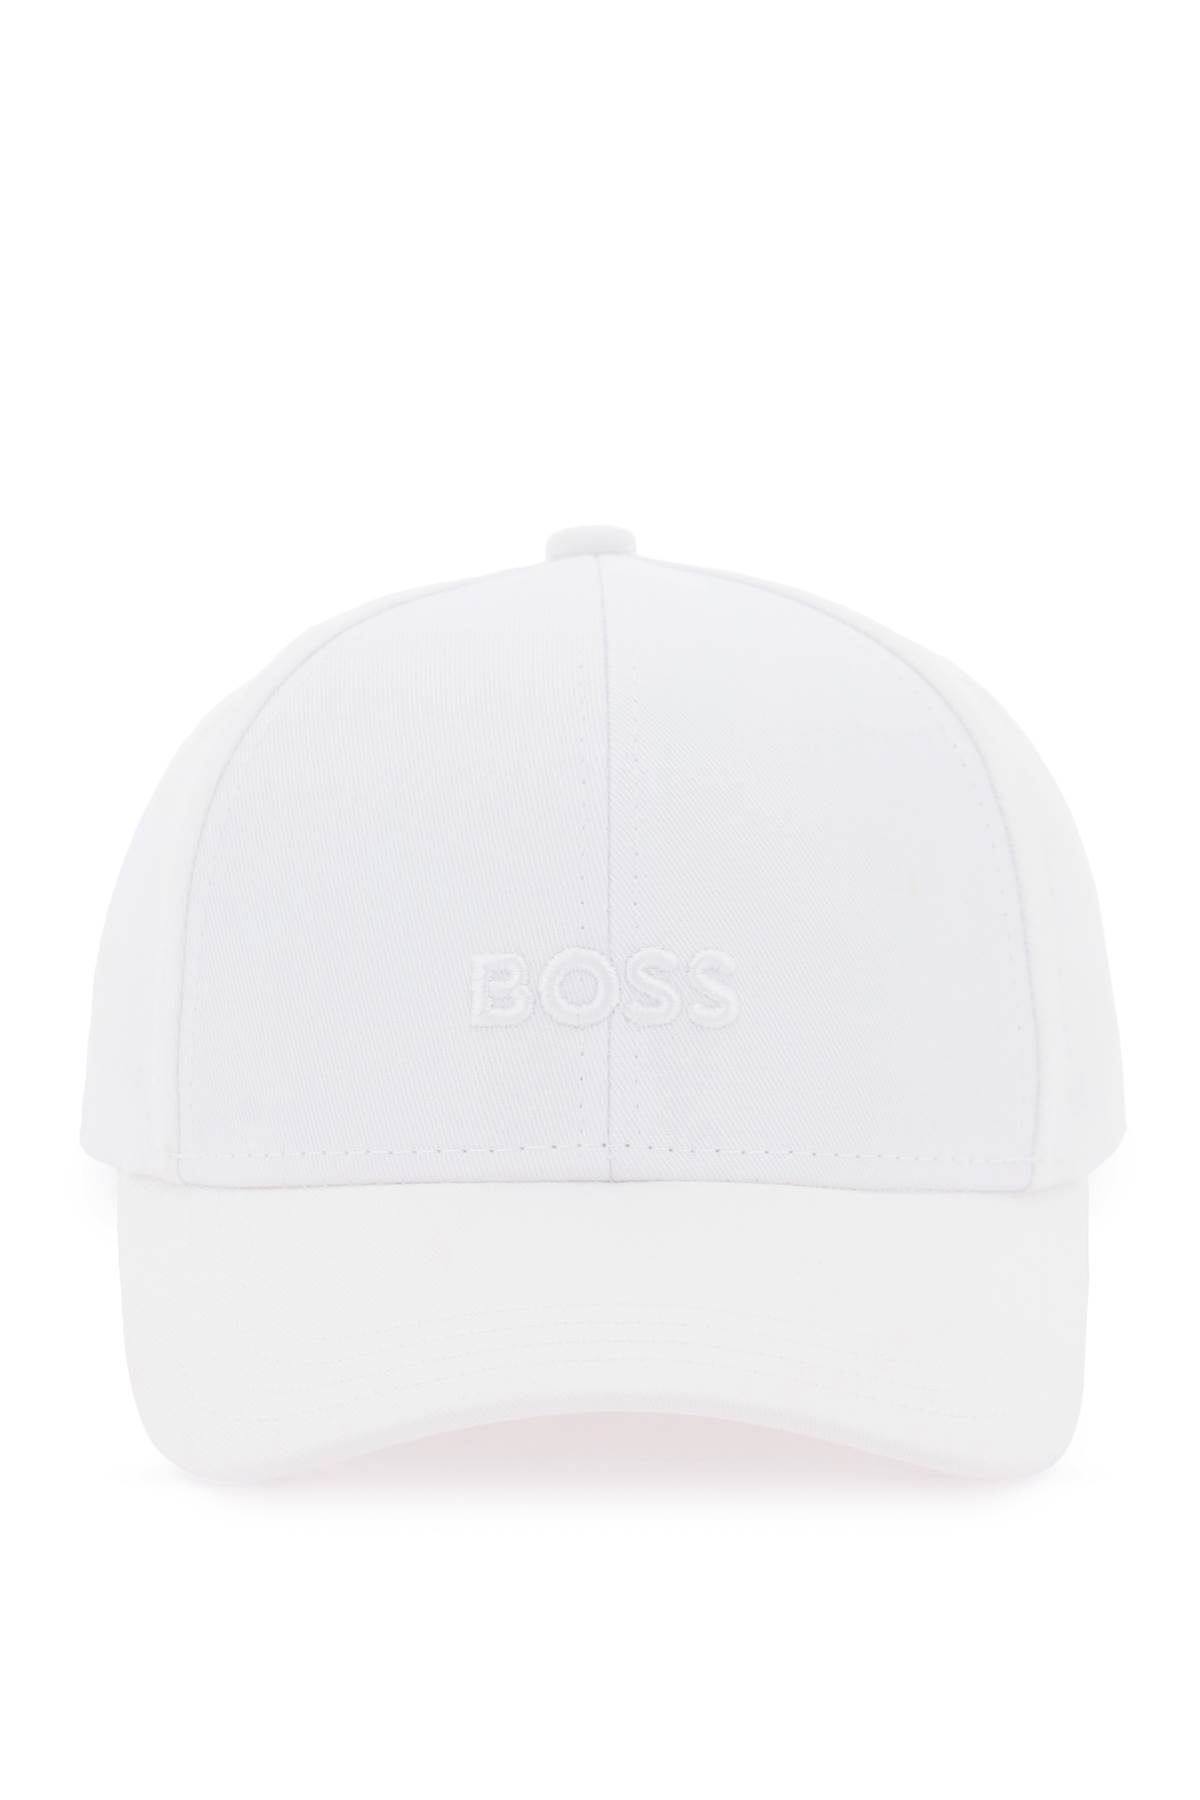 Hugo Boss Baseball Cap A SALE LIKE | italist, With Embroidered ALWAYS Logo